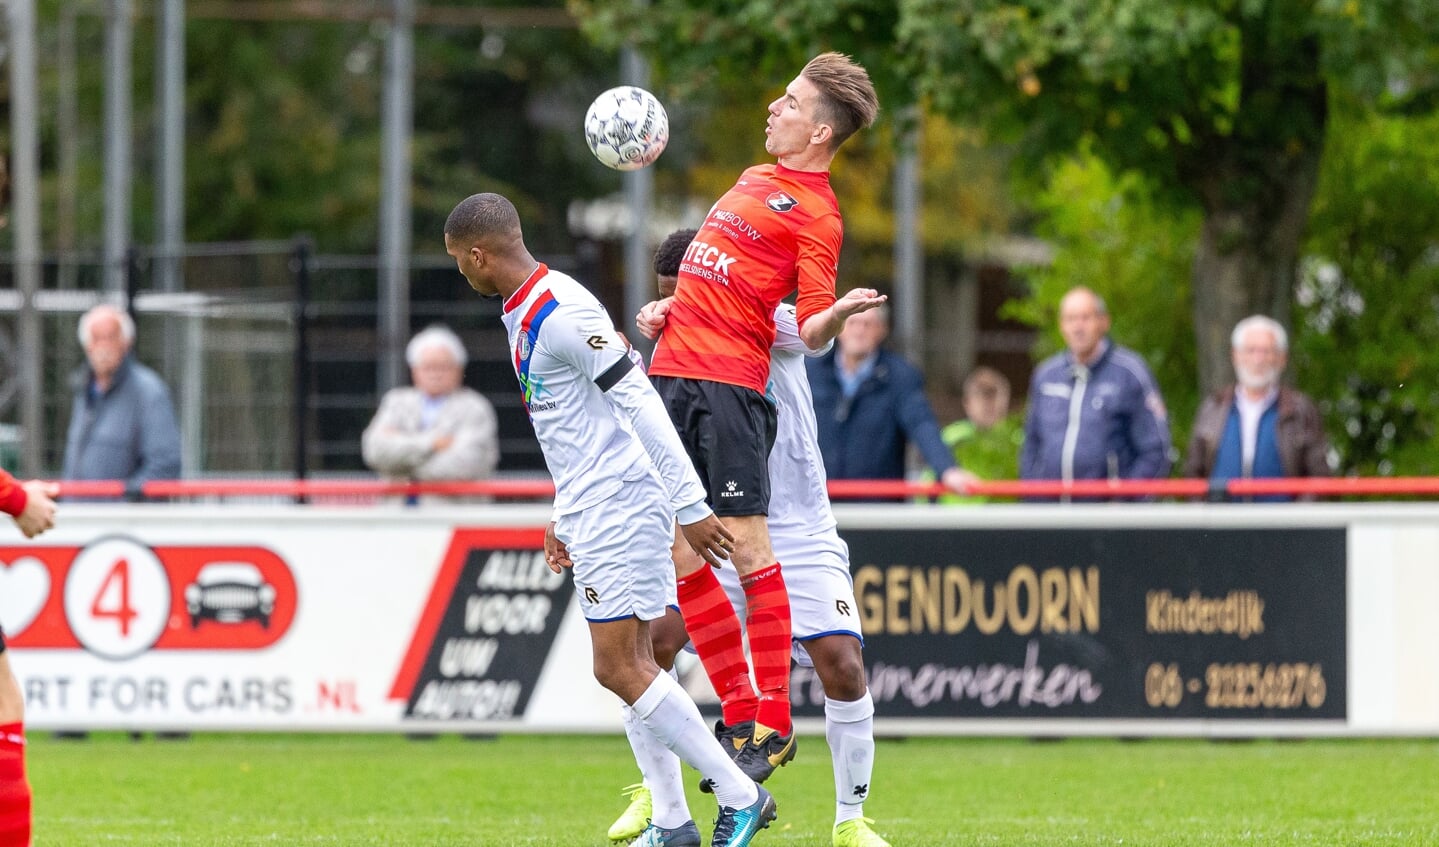 De Zwerver - SV Charlois (1-1).